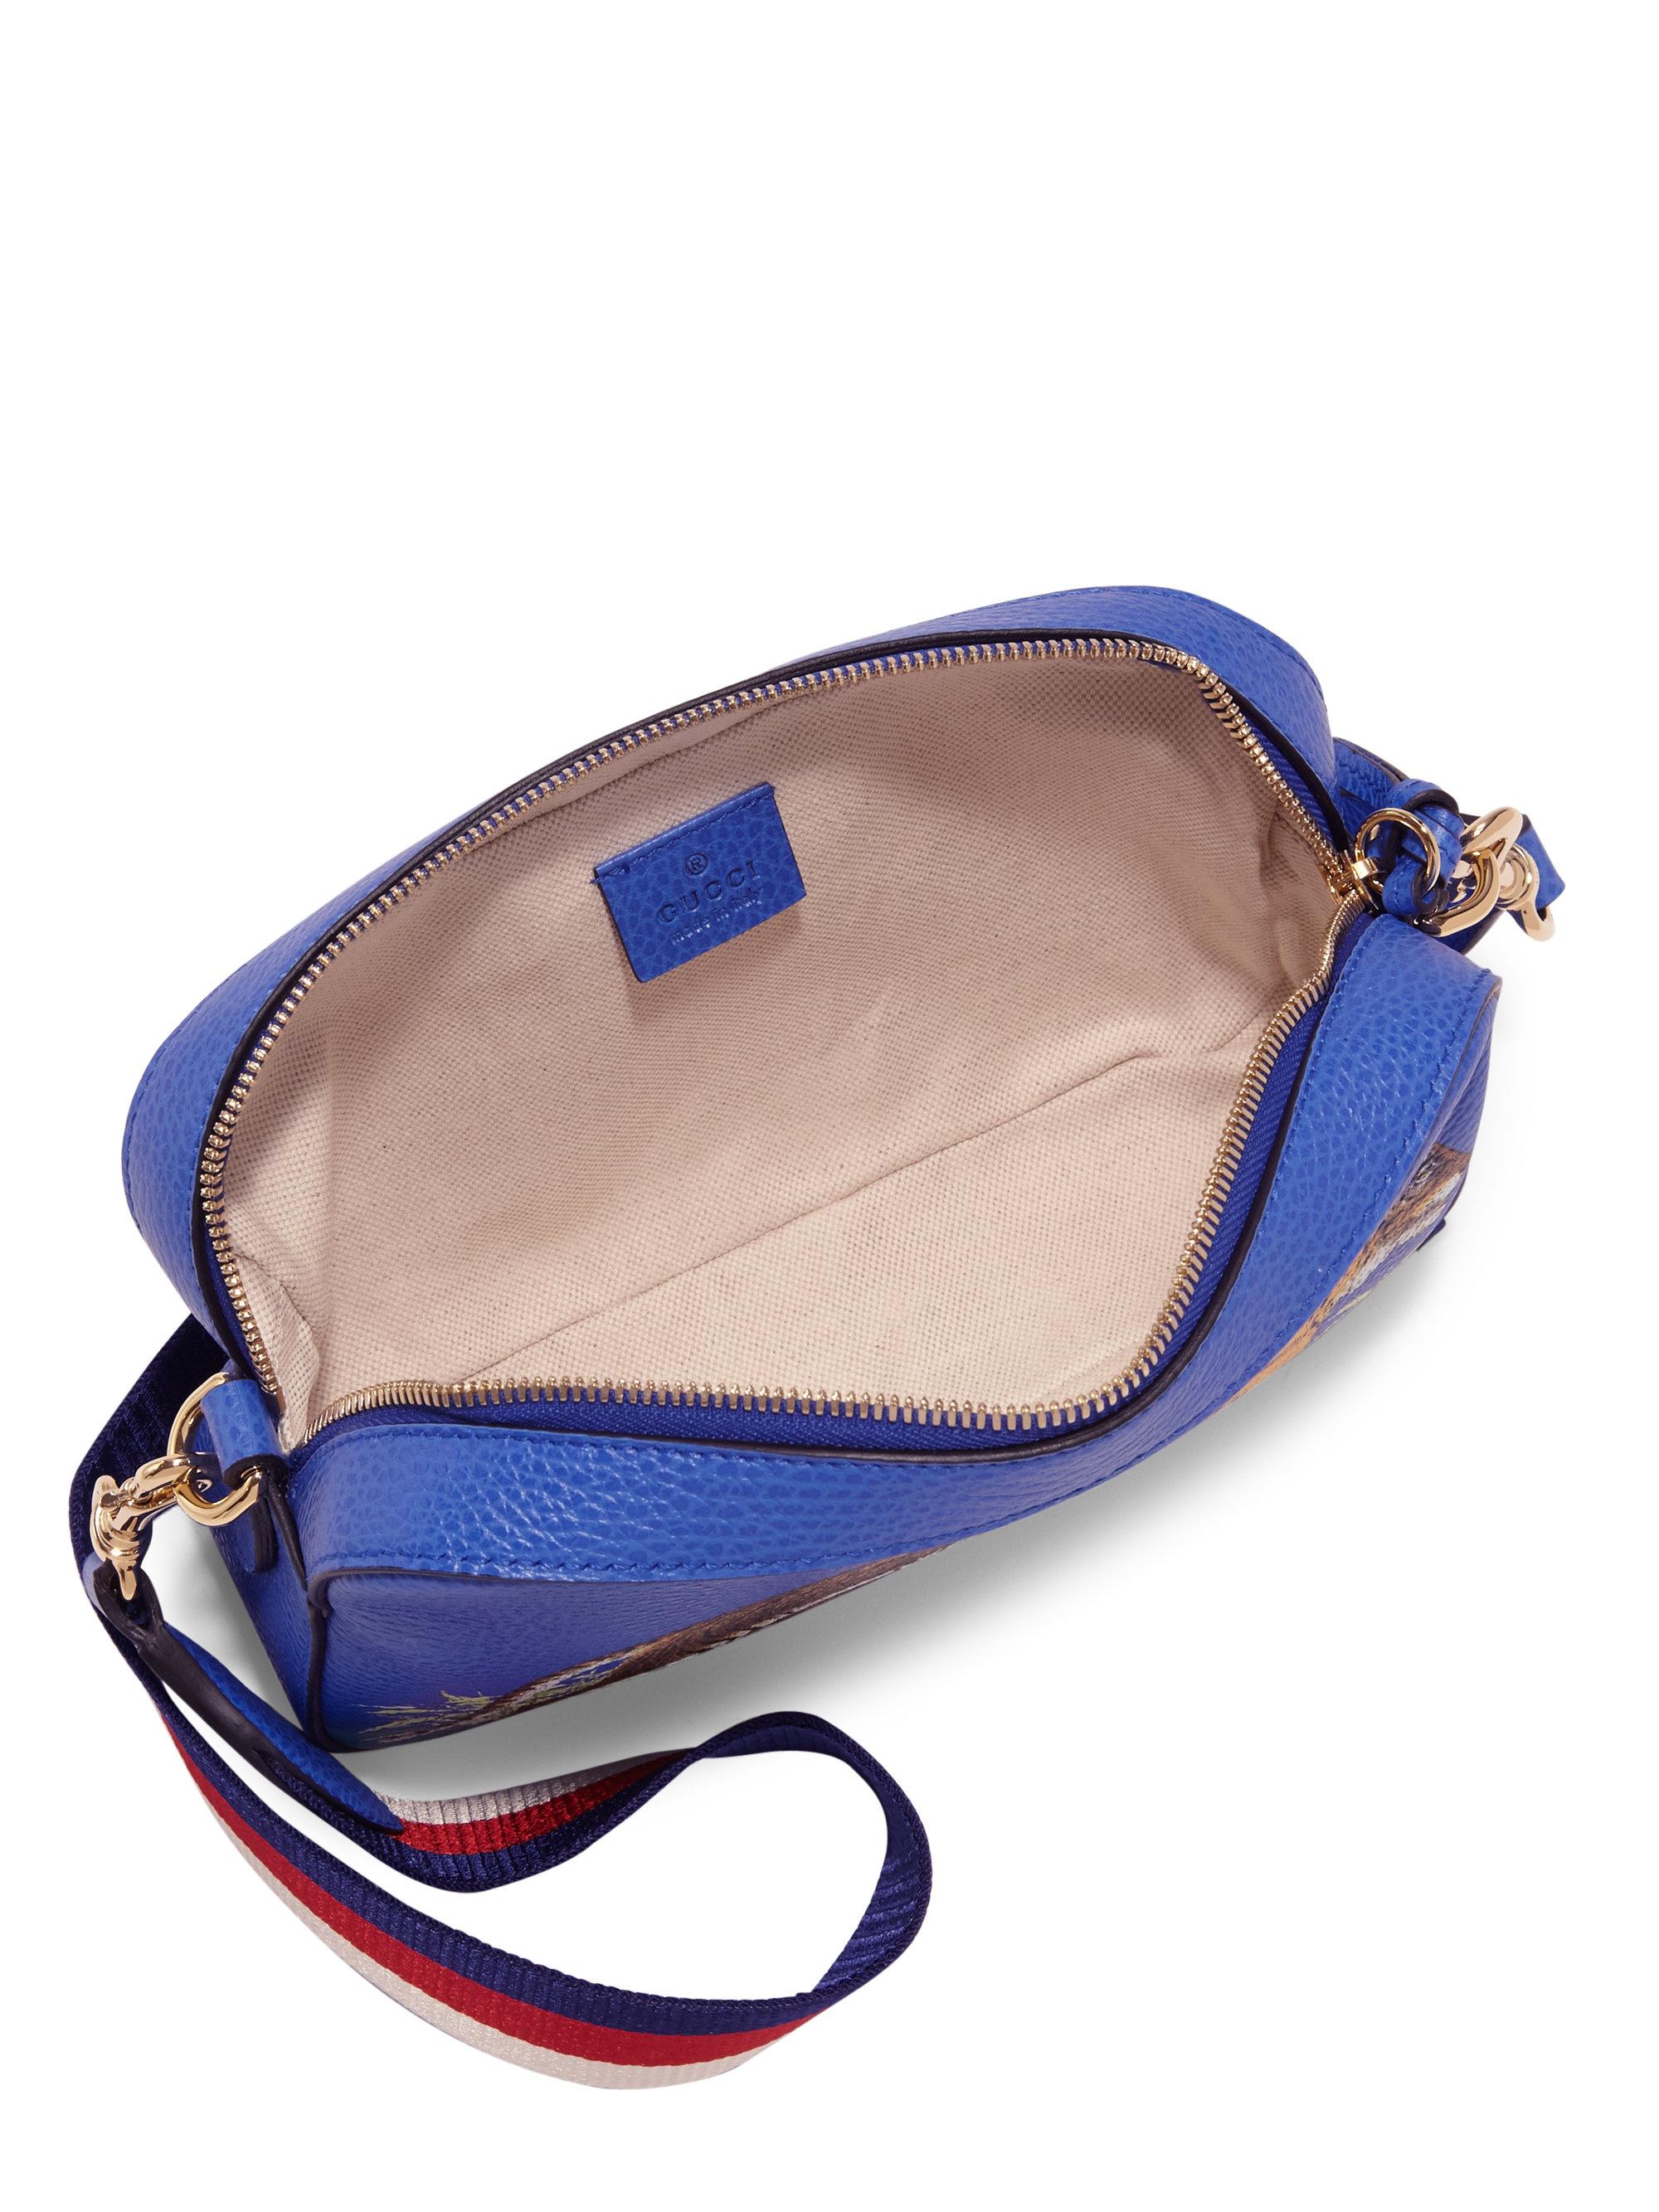 China Waterproof Leather Messenger Bag, Waterproof Leather